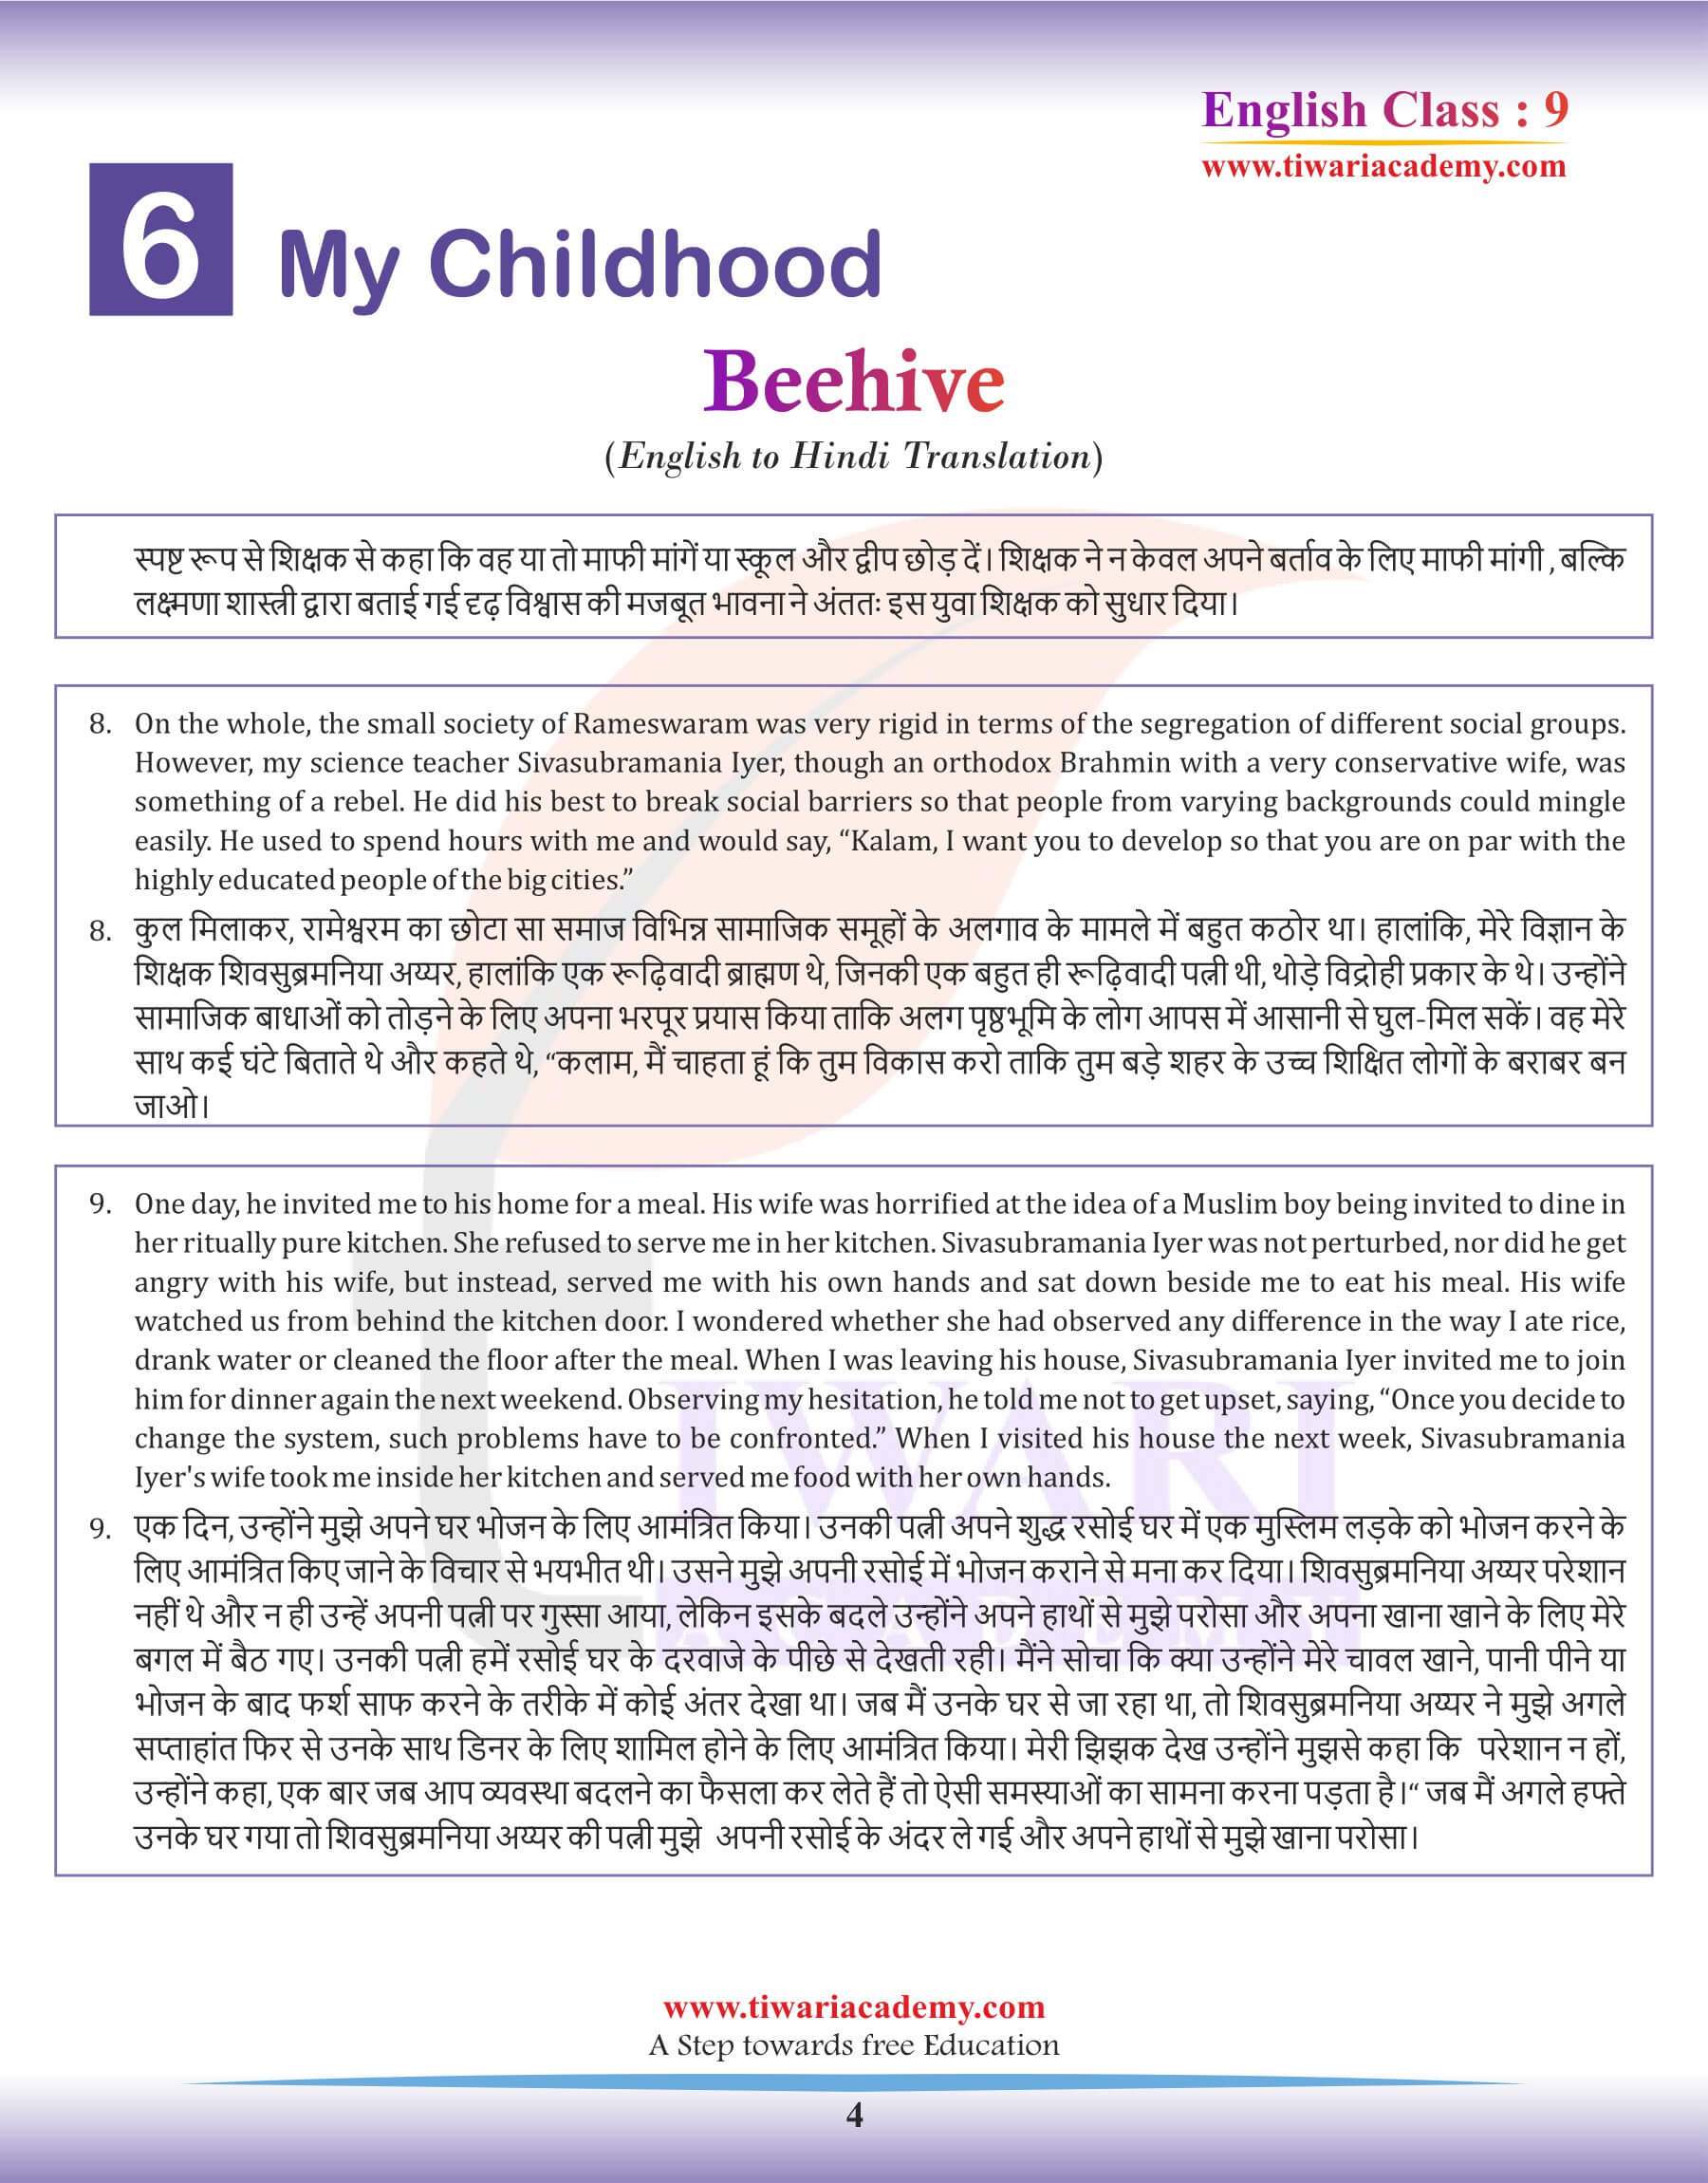 Class 9 English Beehive Chapter 6 English to Hindi Translation